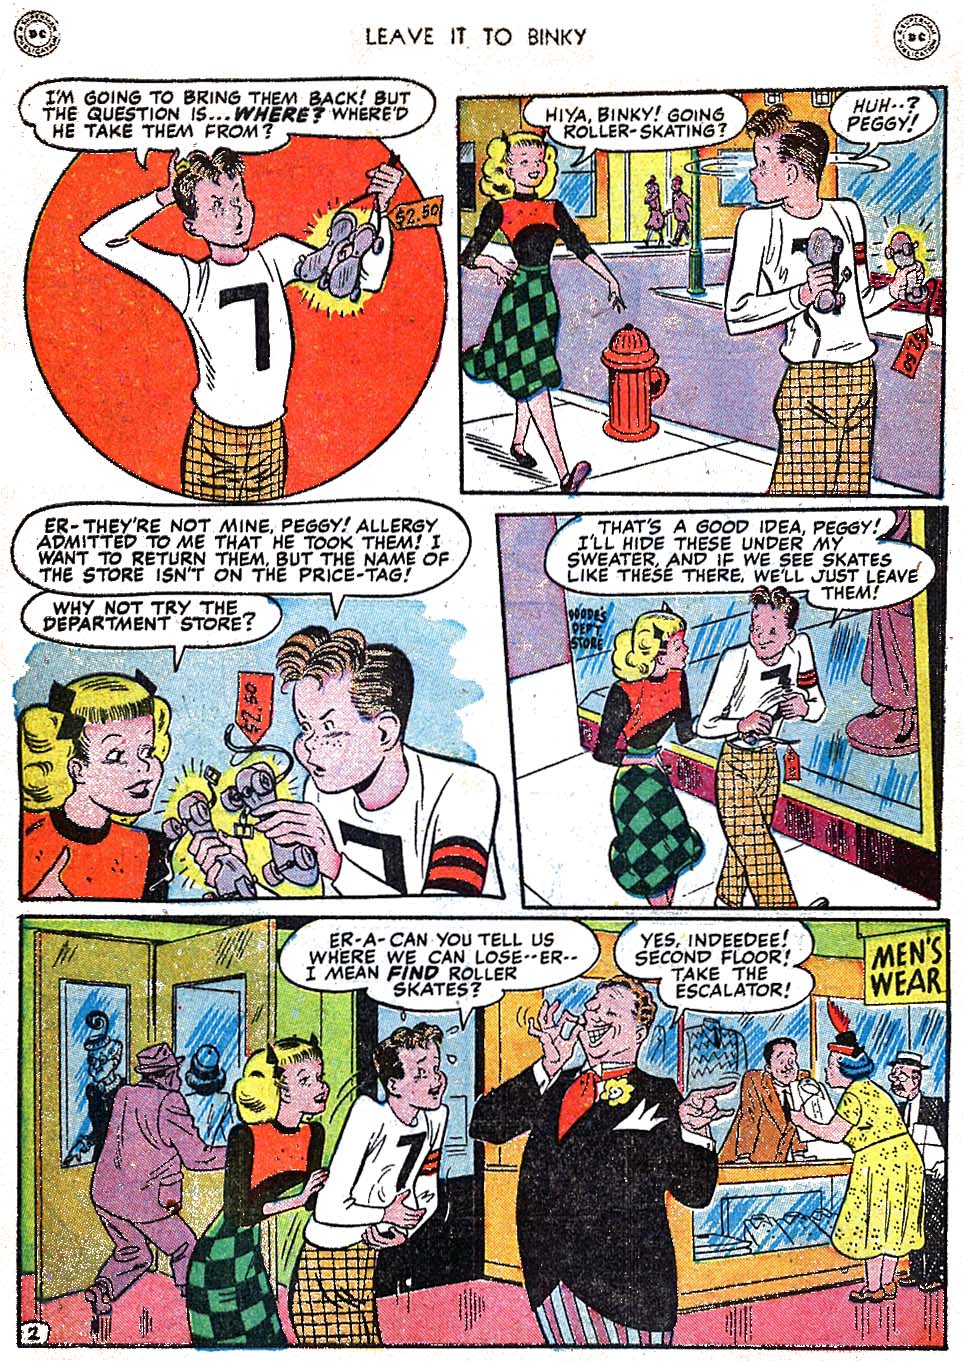 Read online Leave it to Binky comic -  Issue #5 - 4